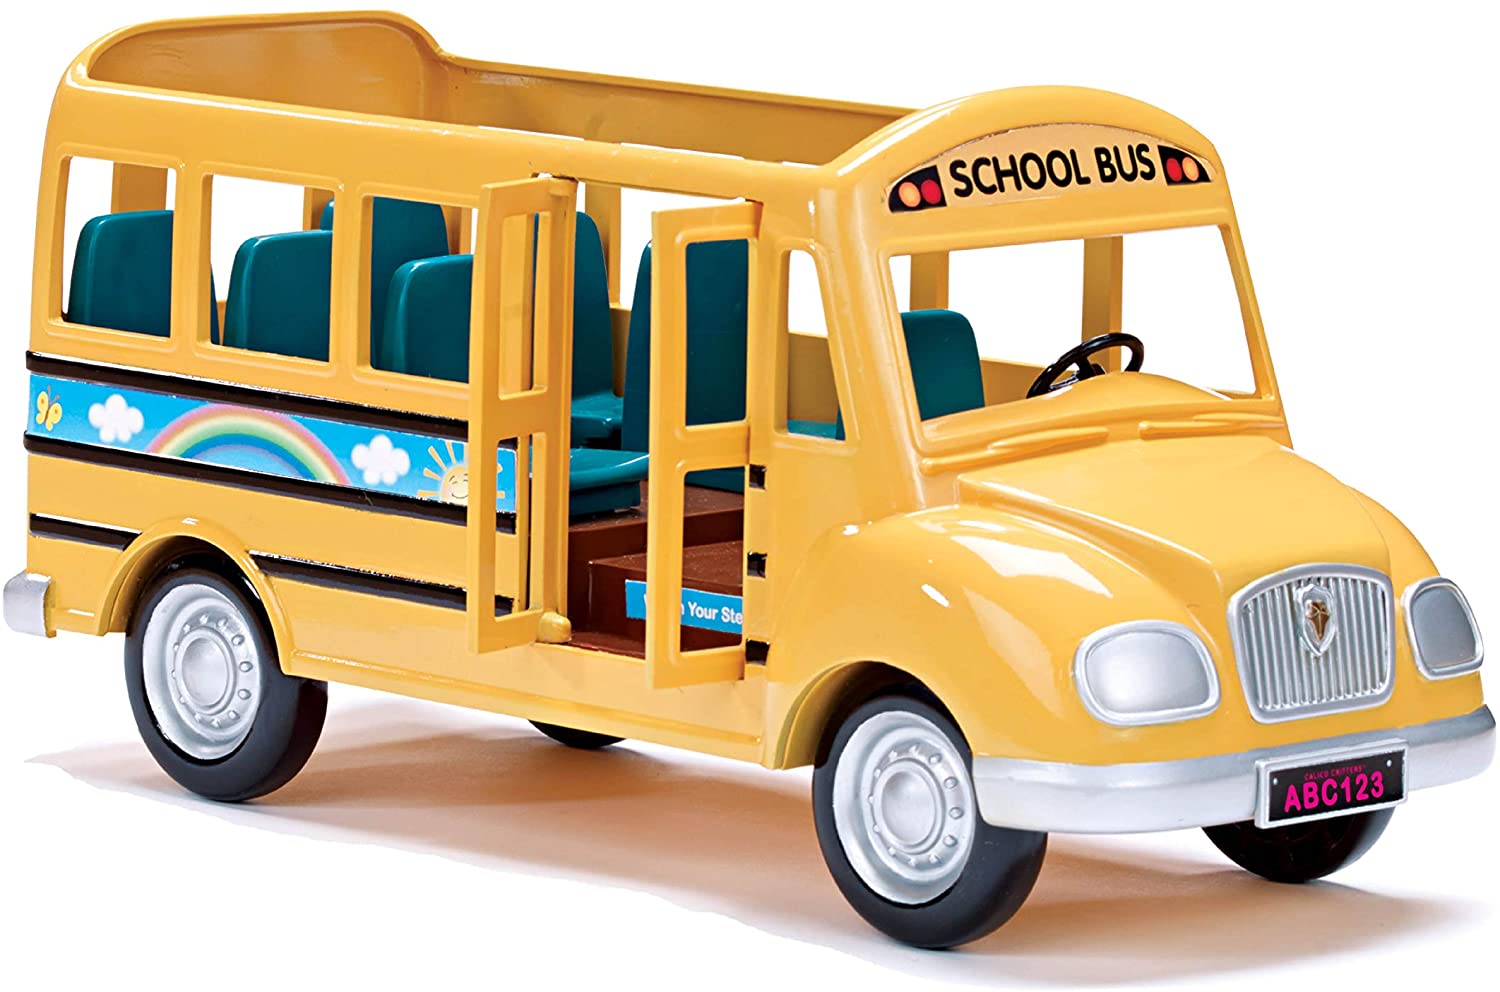 School Bus Calico Critter